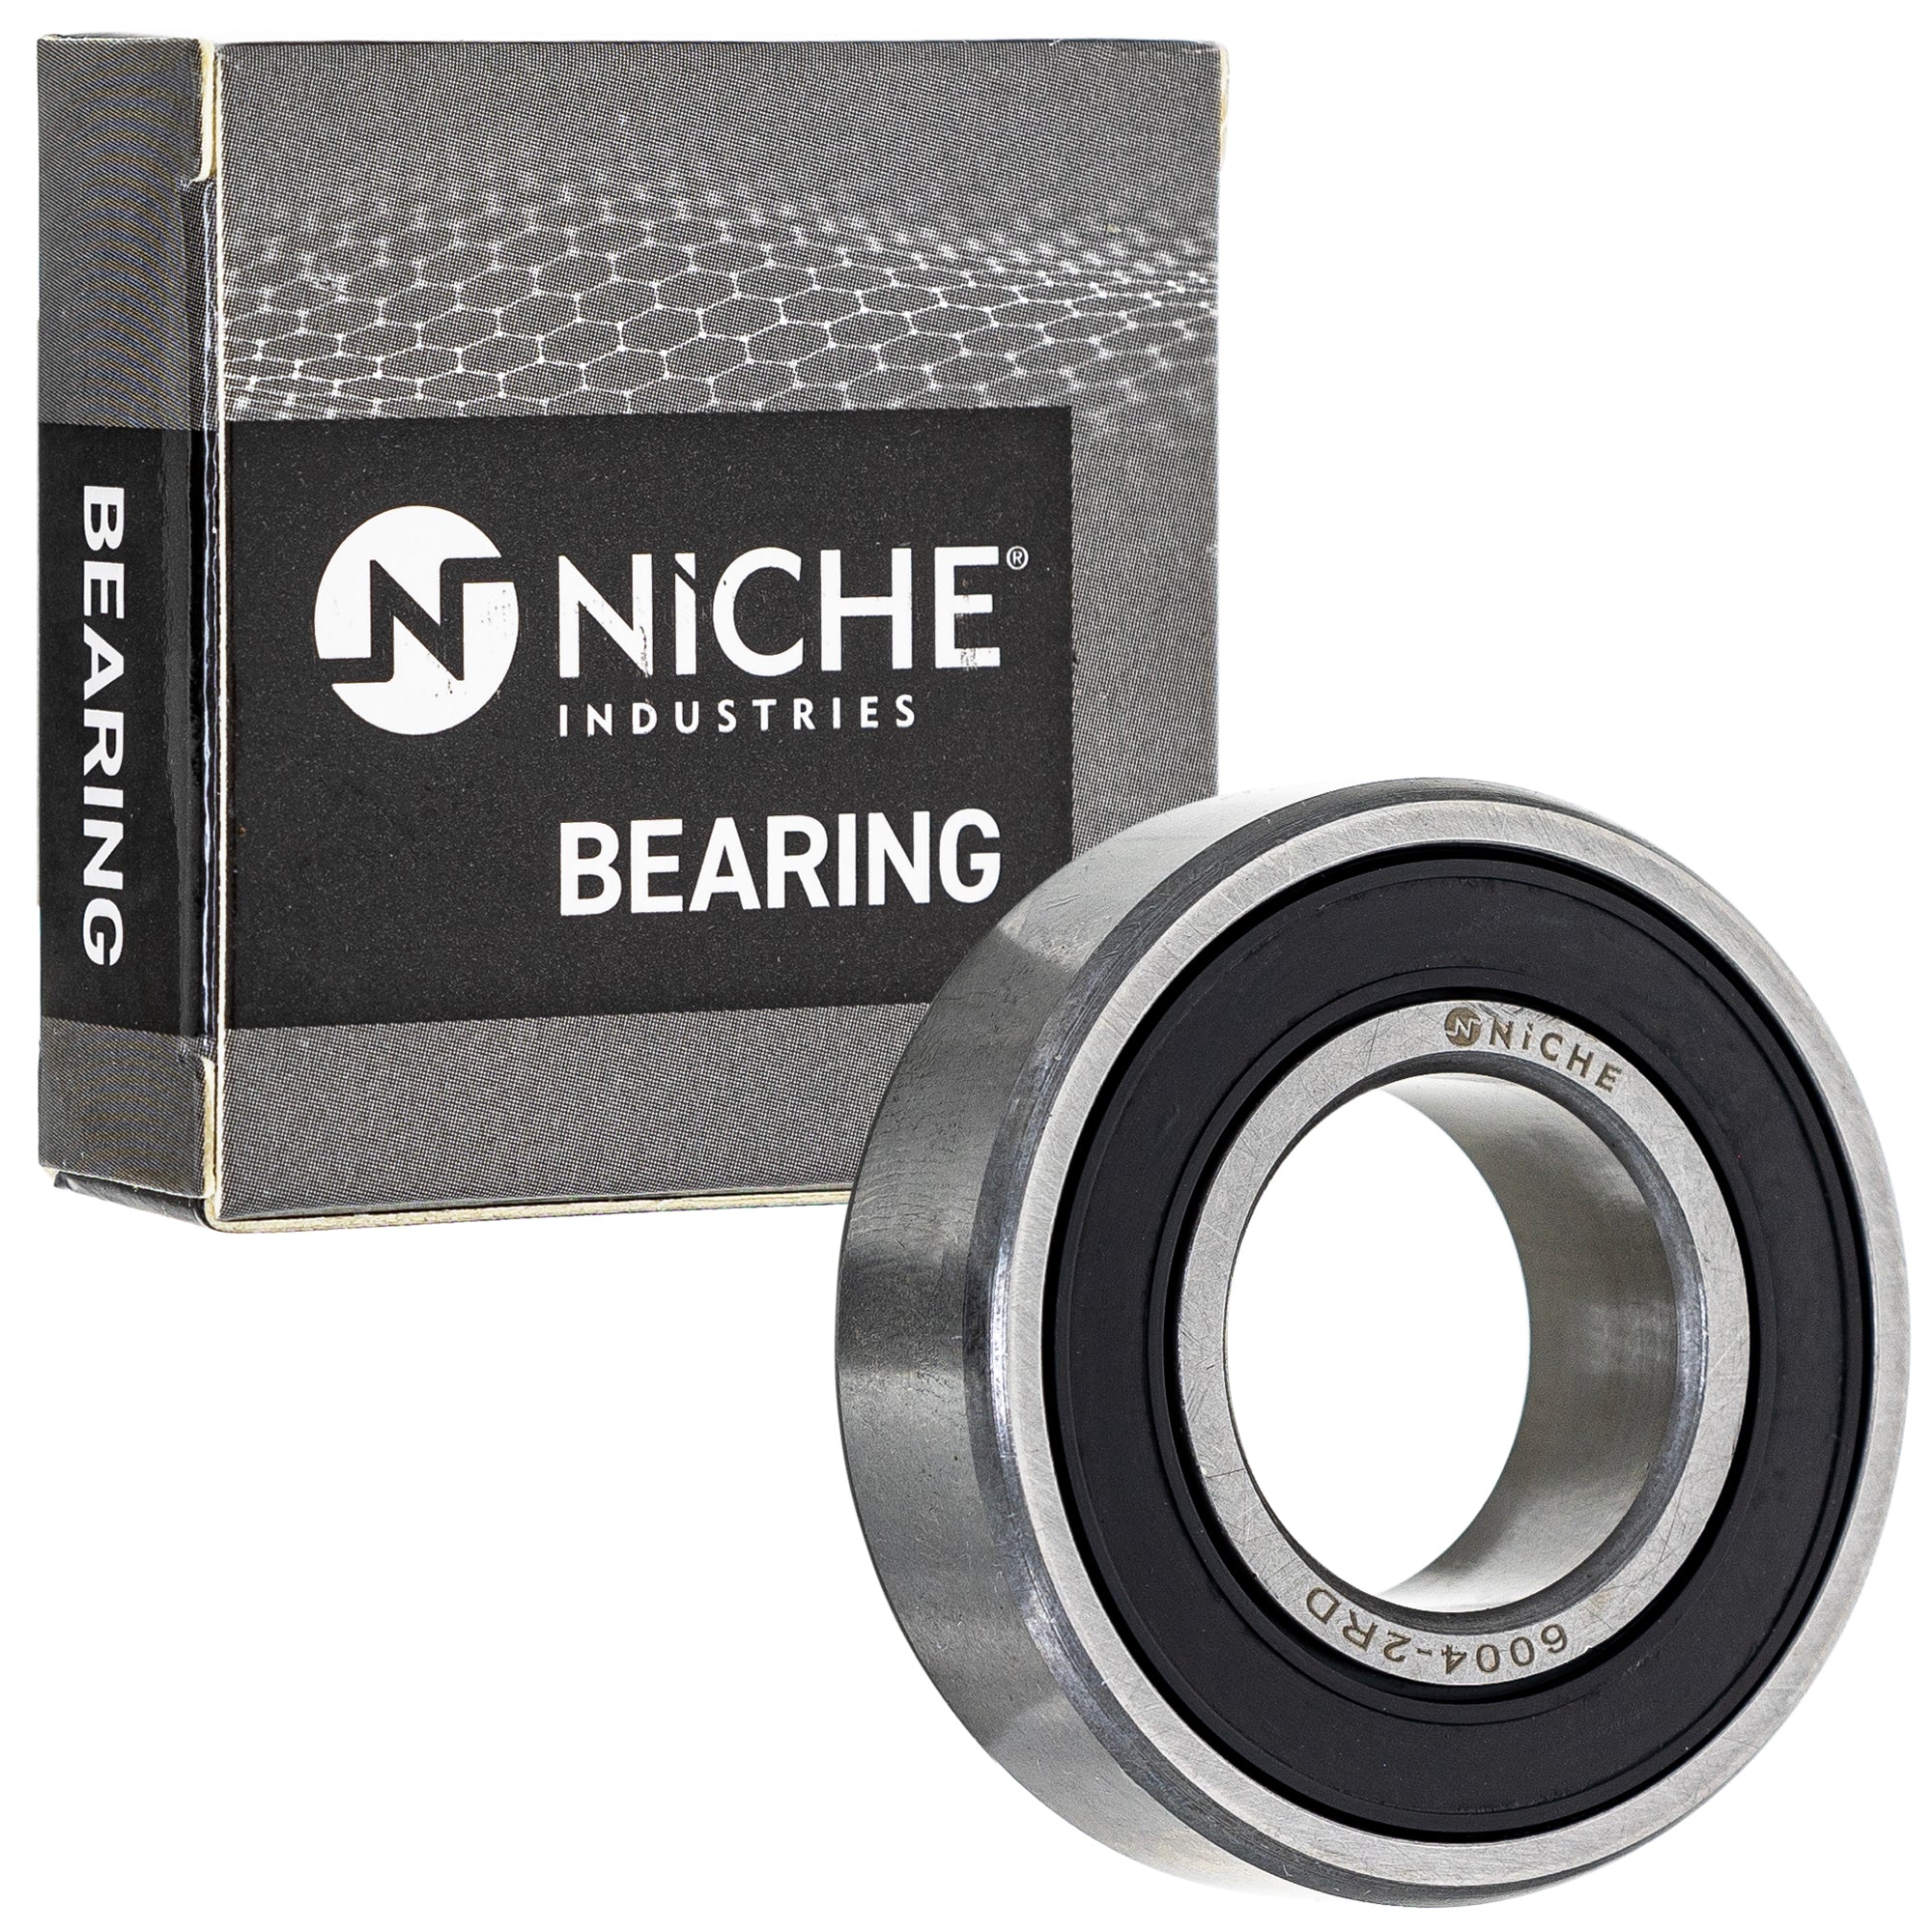 NICHE 519-CBB2230R Bearing 2-Pack for zOTHER VFR750R TT600 TRX450